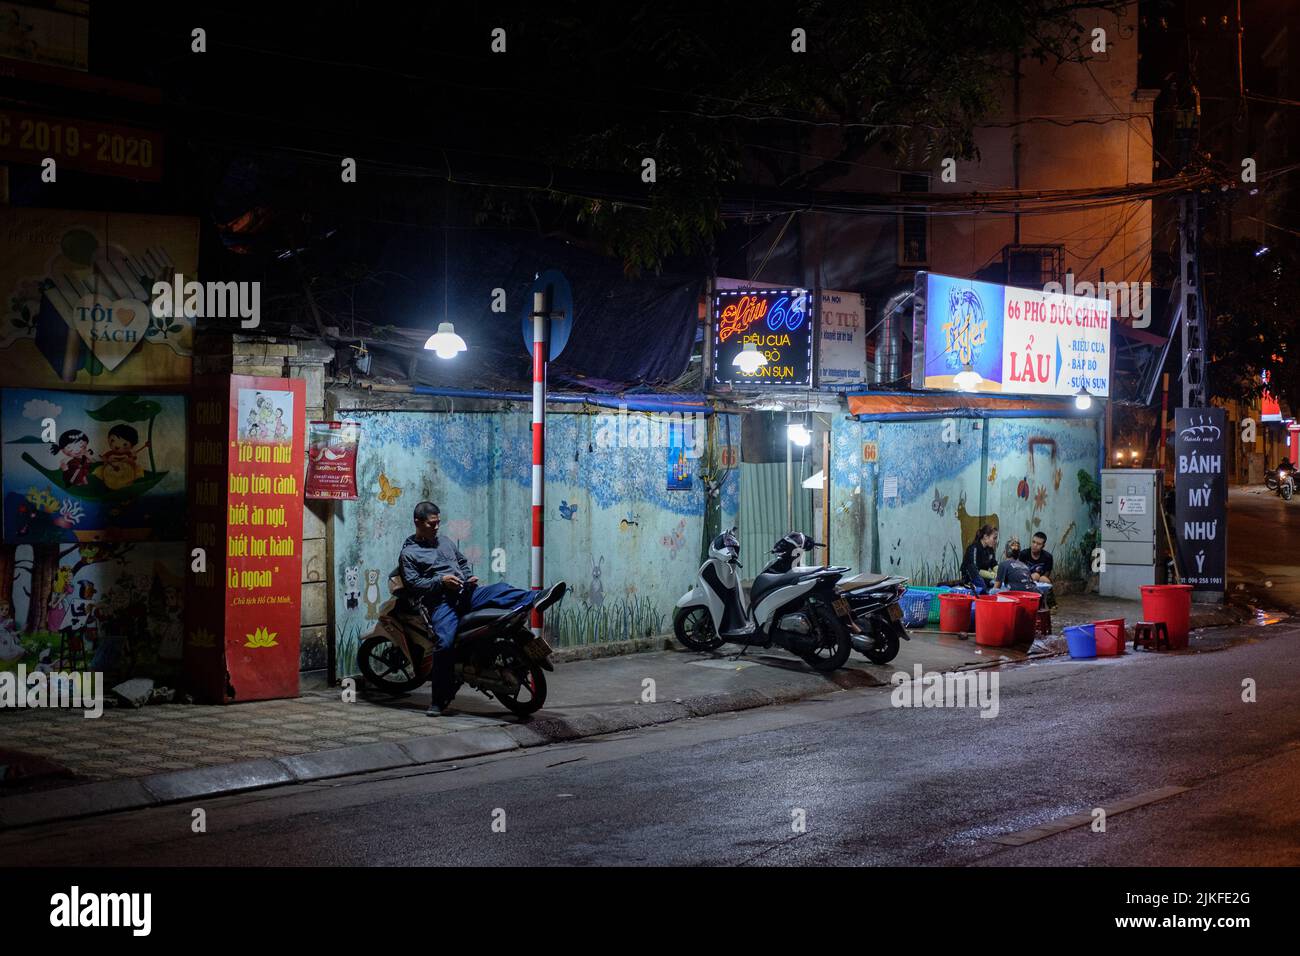 HANOI, VIETNAM - JANUARY 5, 2020: Scenes from the night streets of Hanoi, Vietnam on January 5, 2020. Stock Photo